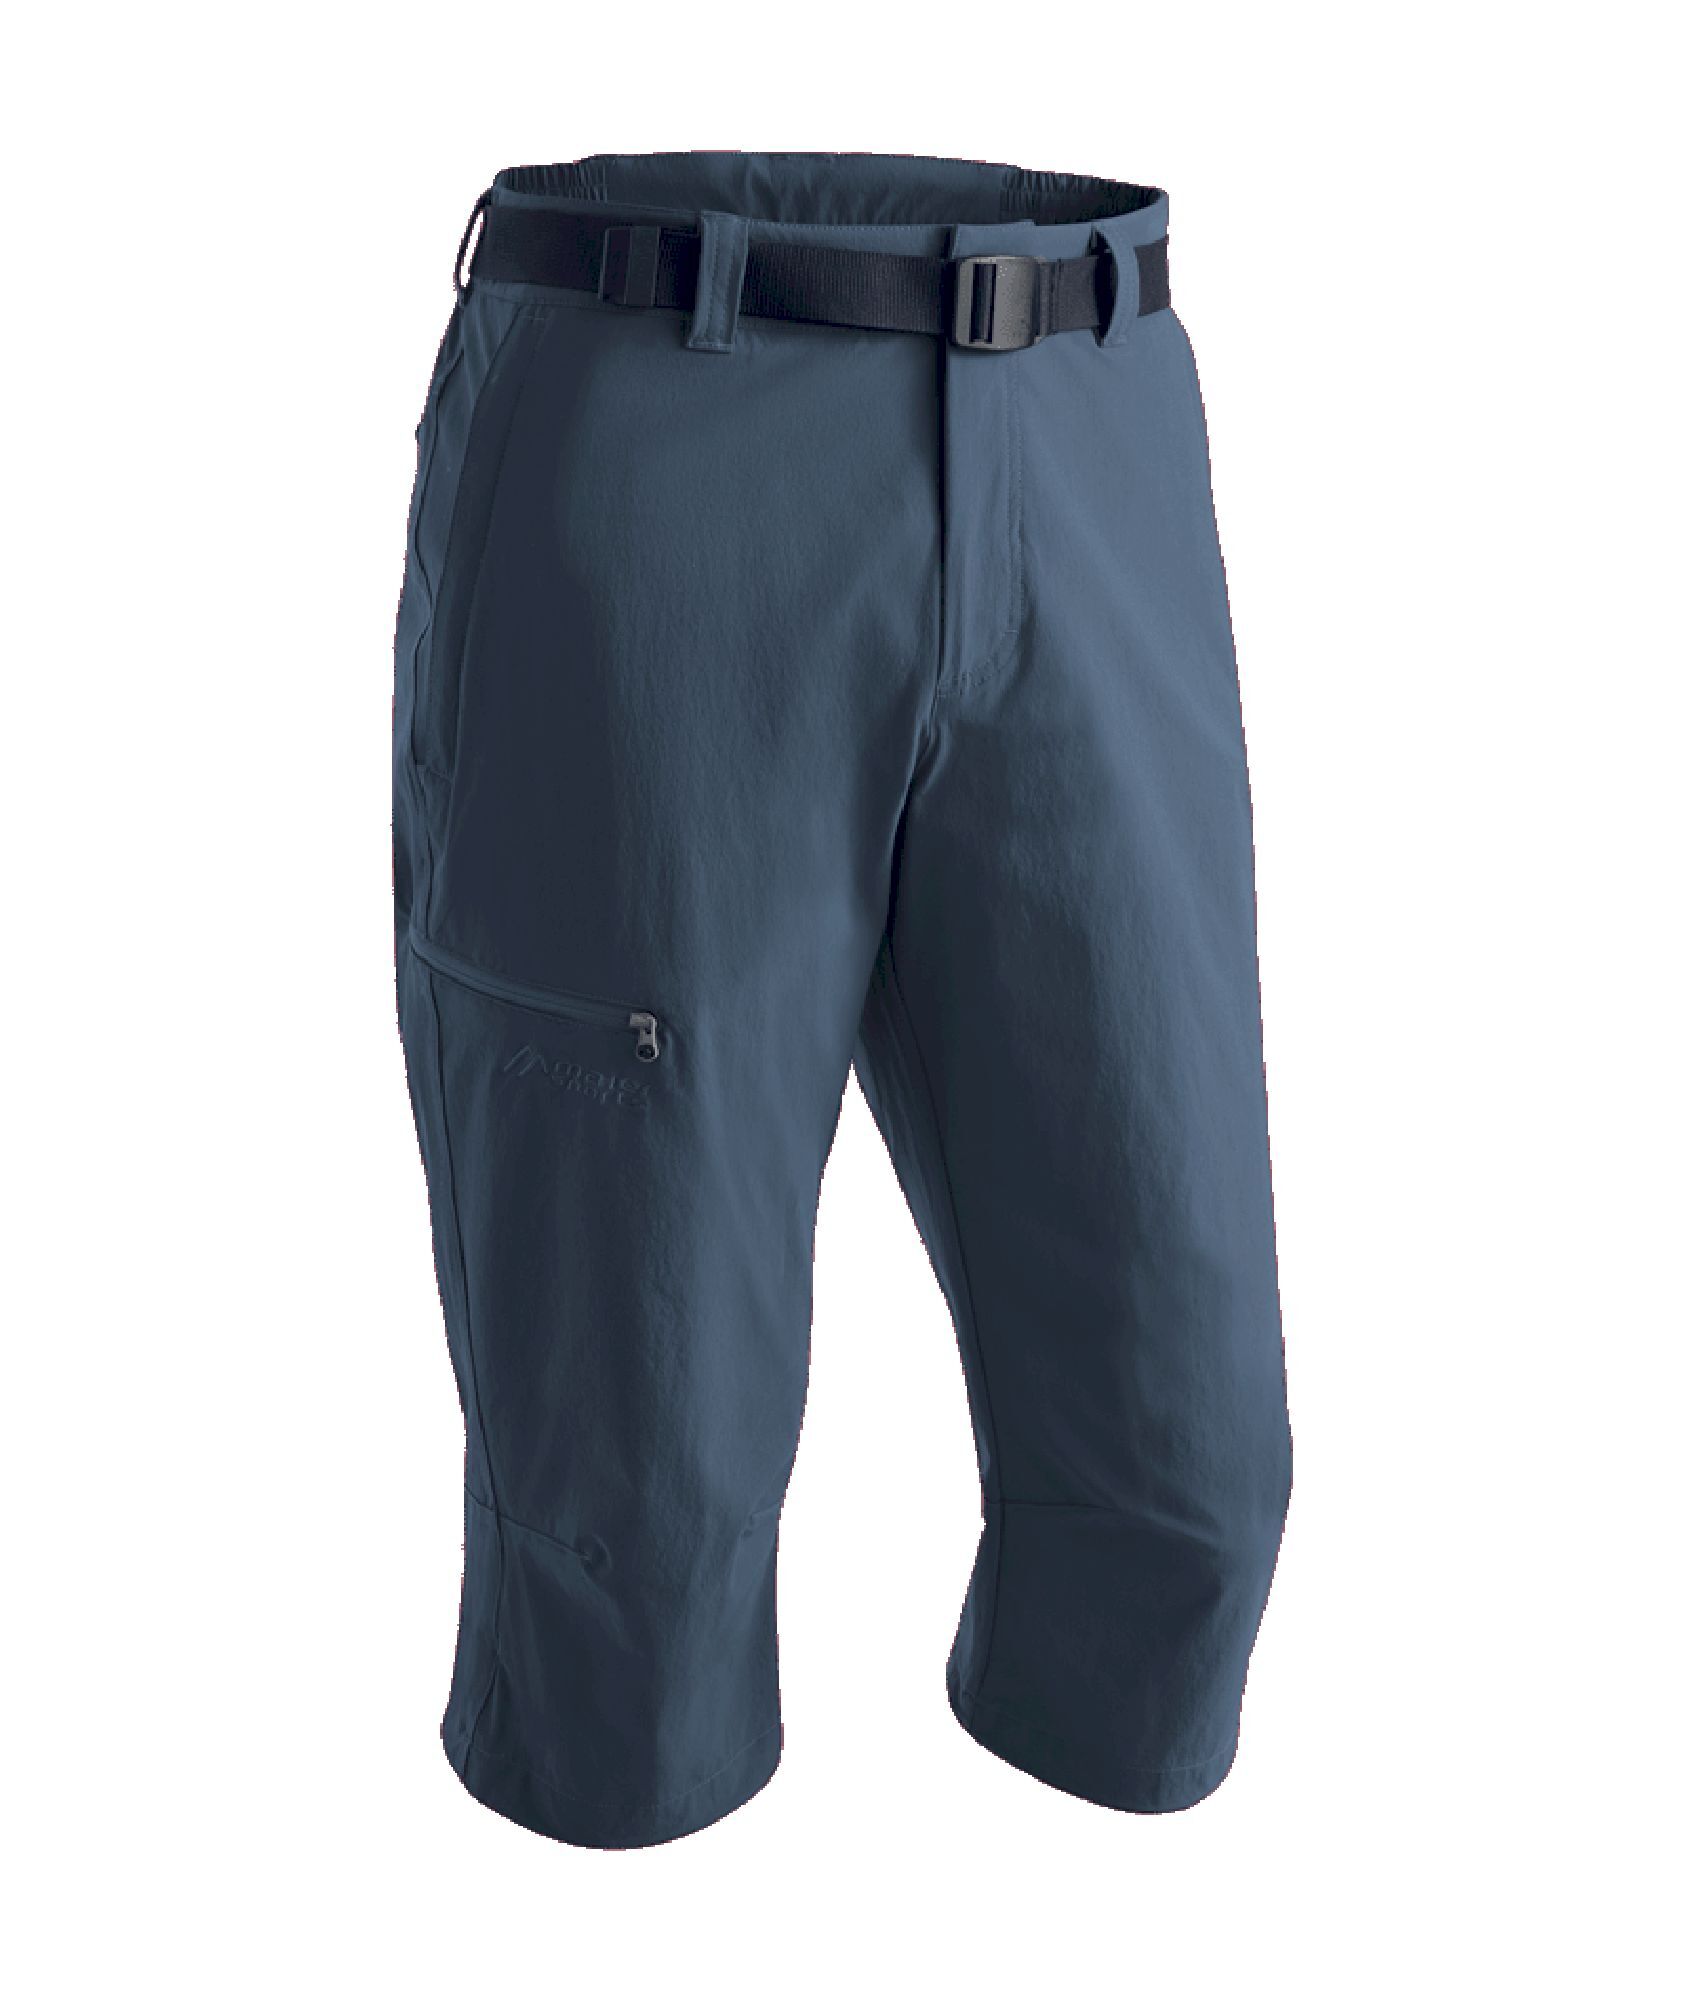 Maier Sports Jennisei Short Pant - Walking trousers - Men's | Hardloop